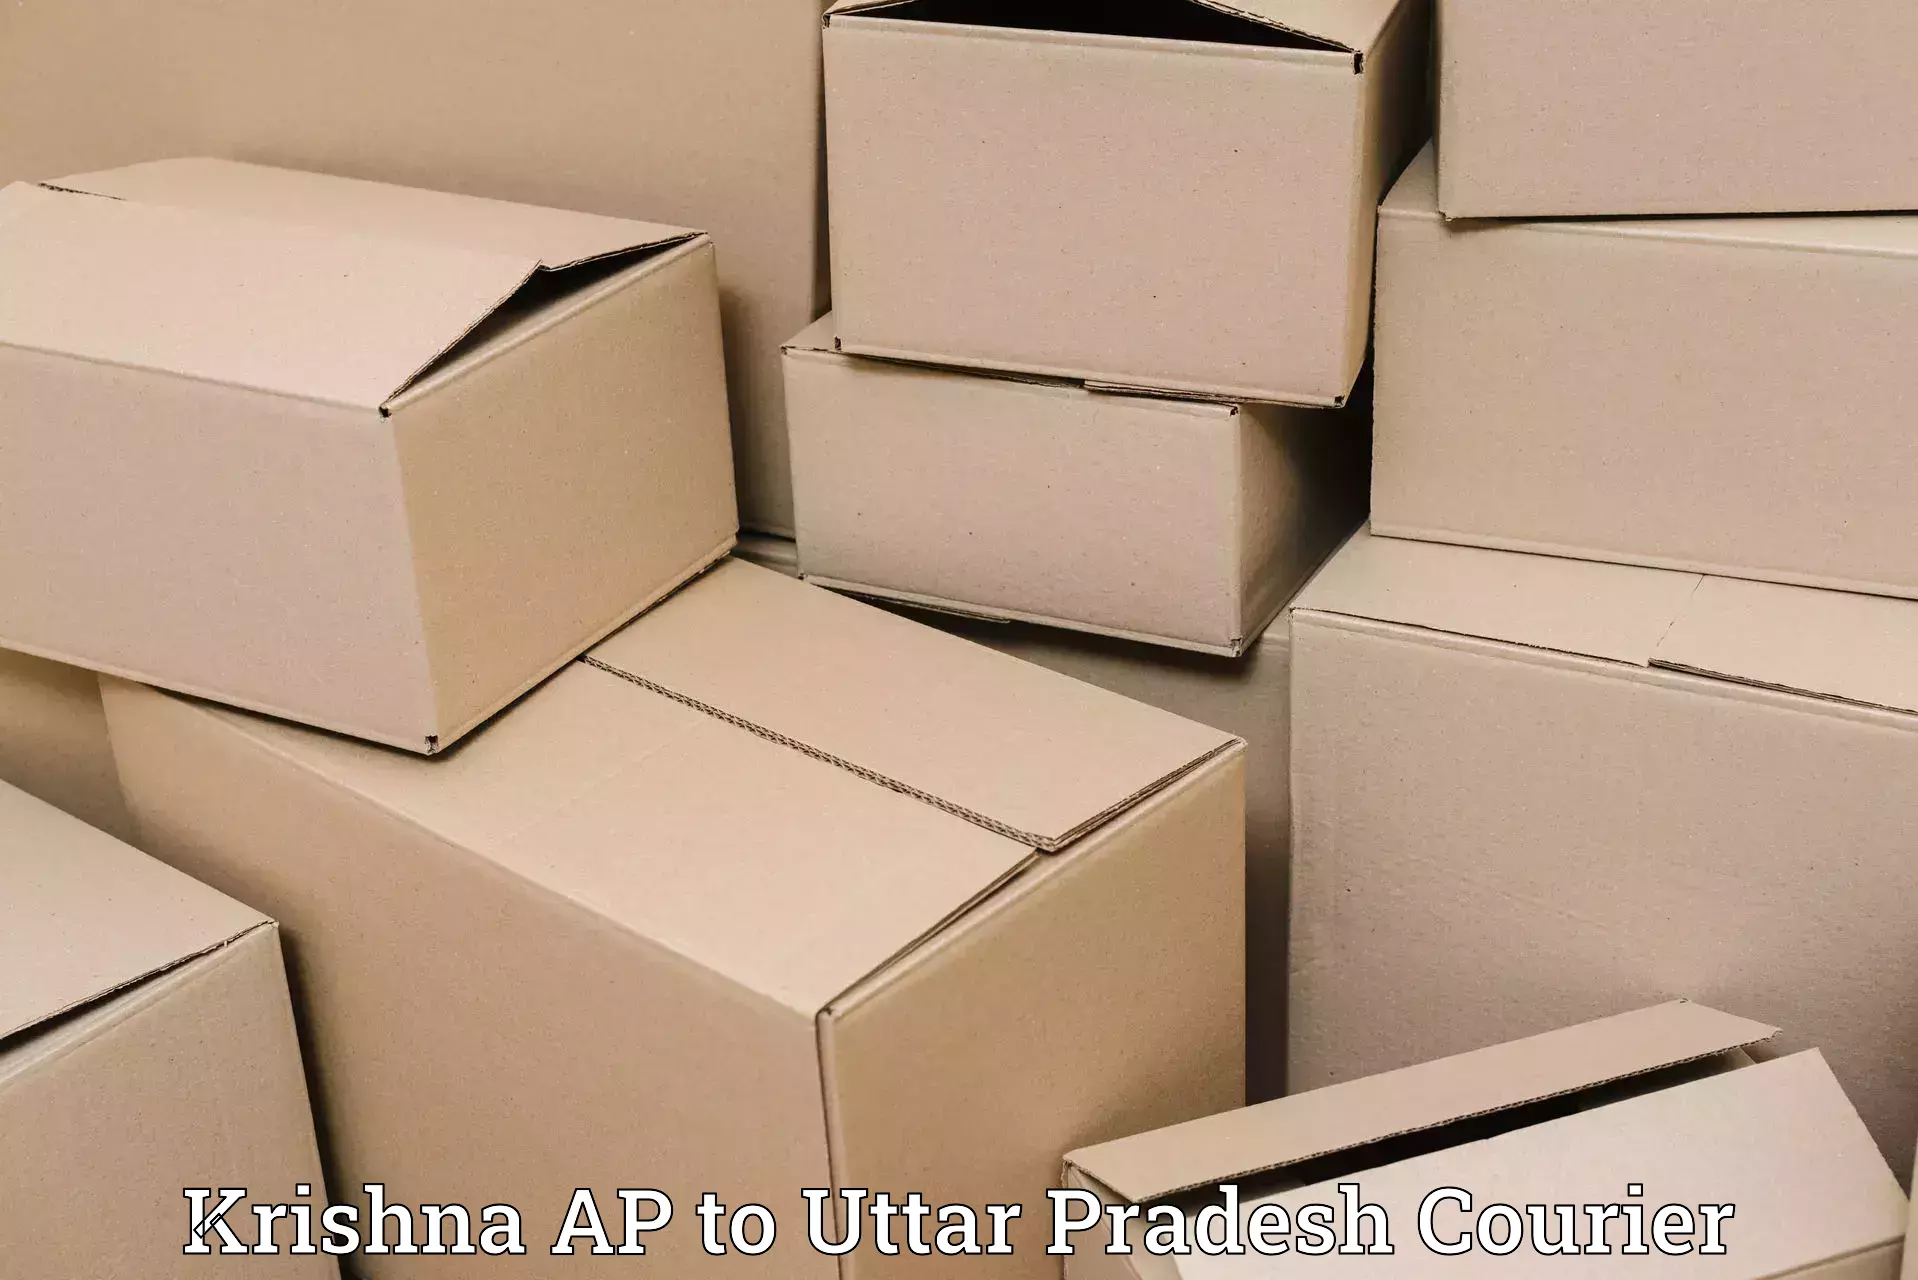 Holiday shipping services Krishna AP to Aligarh Muslim University